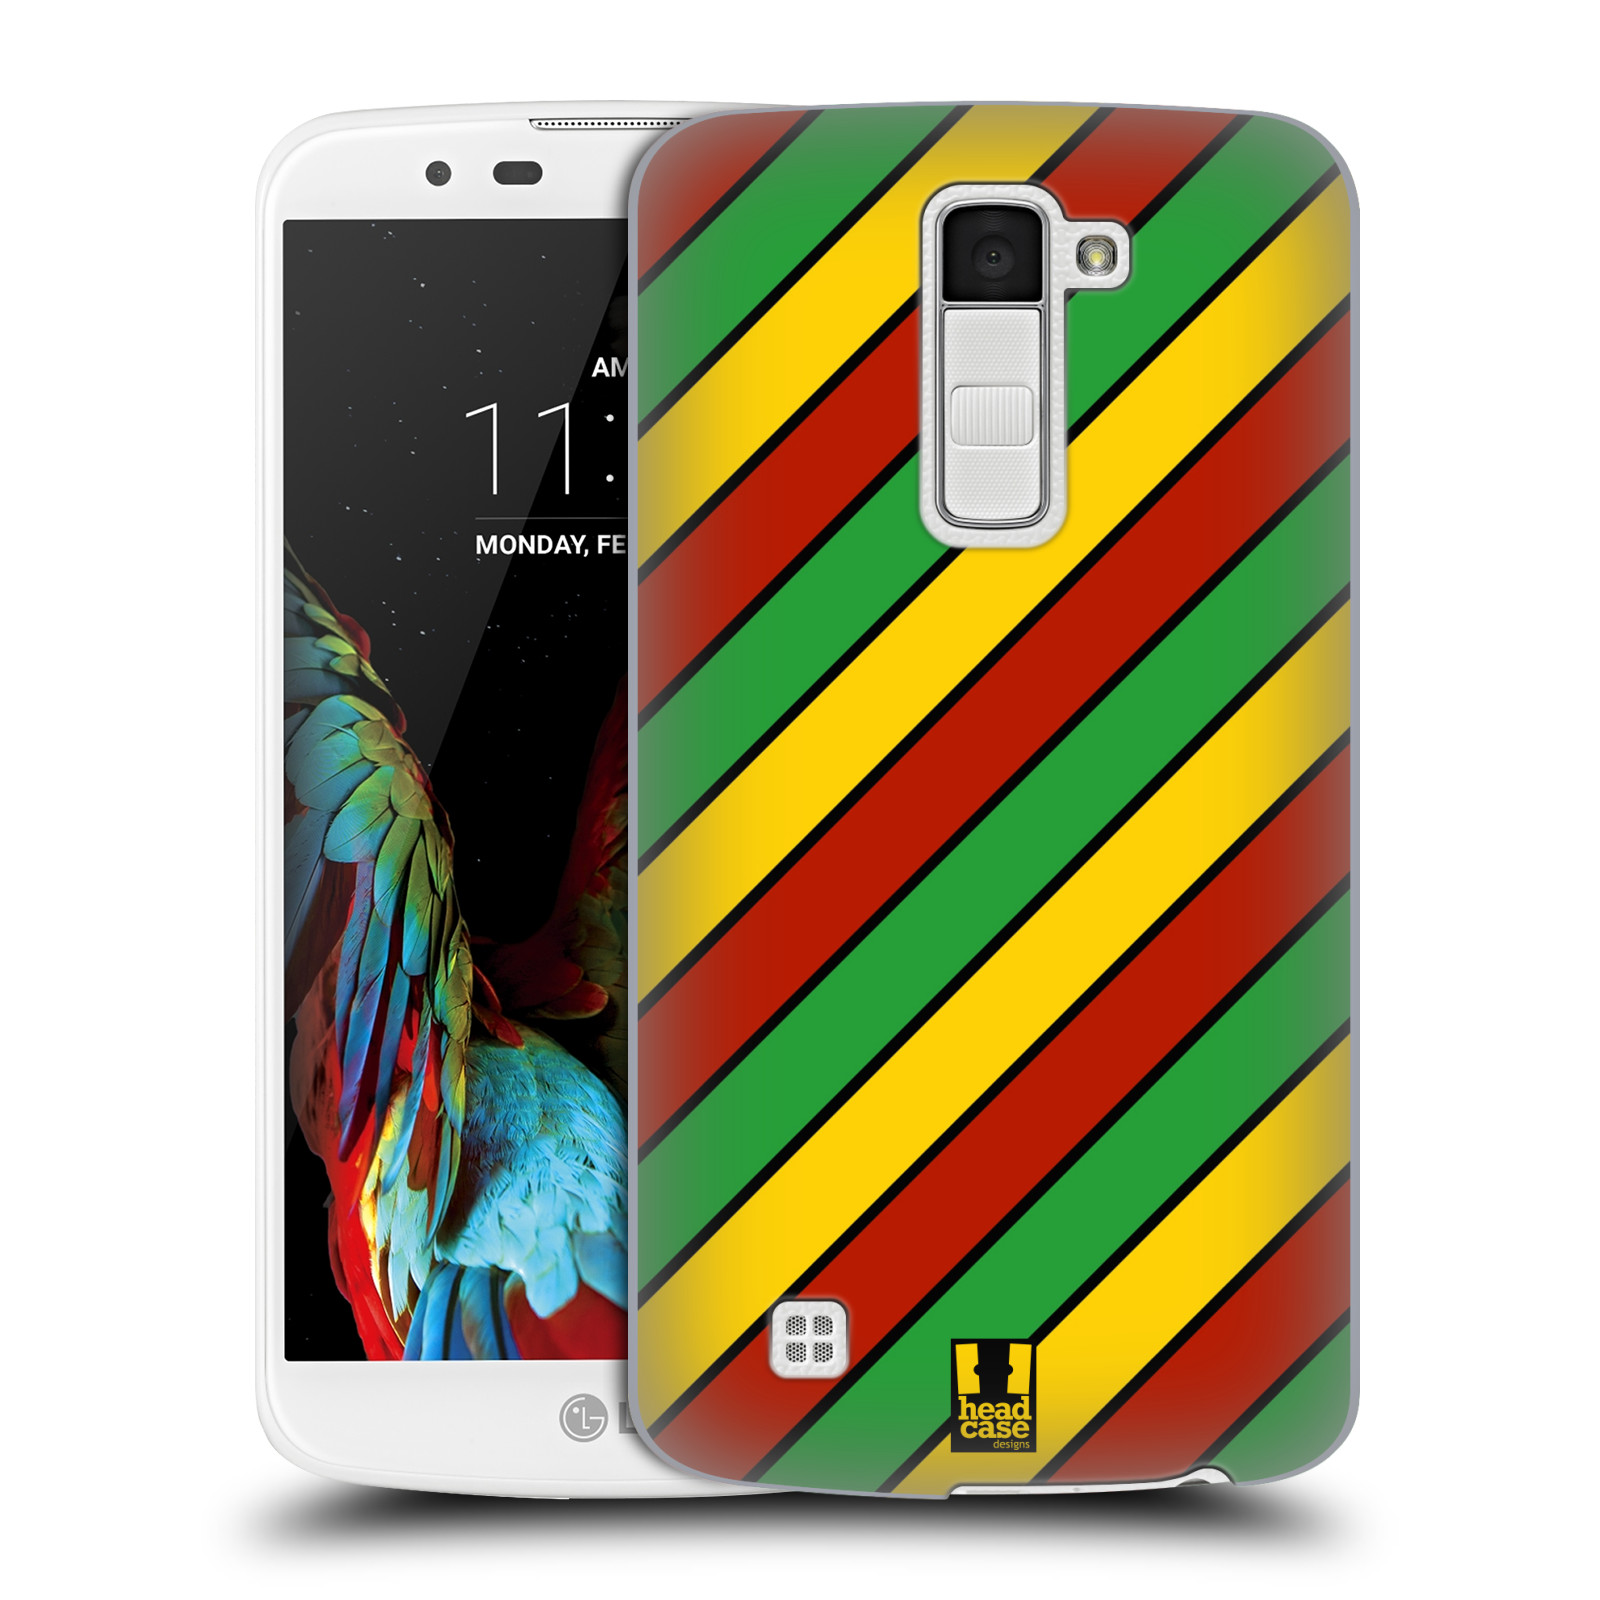 HEAD CASE plastový obal na mobil LG K10 vzor Rasta barevné vzory PRUHY